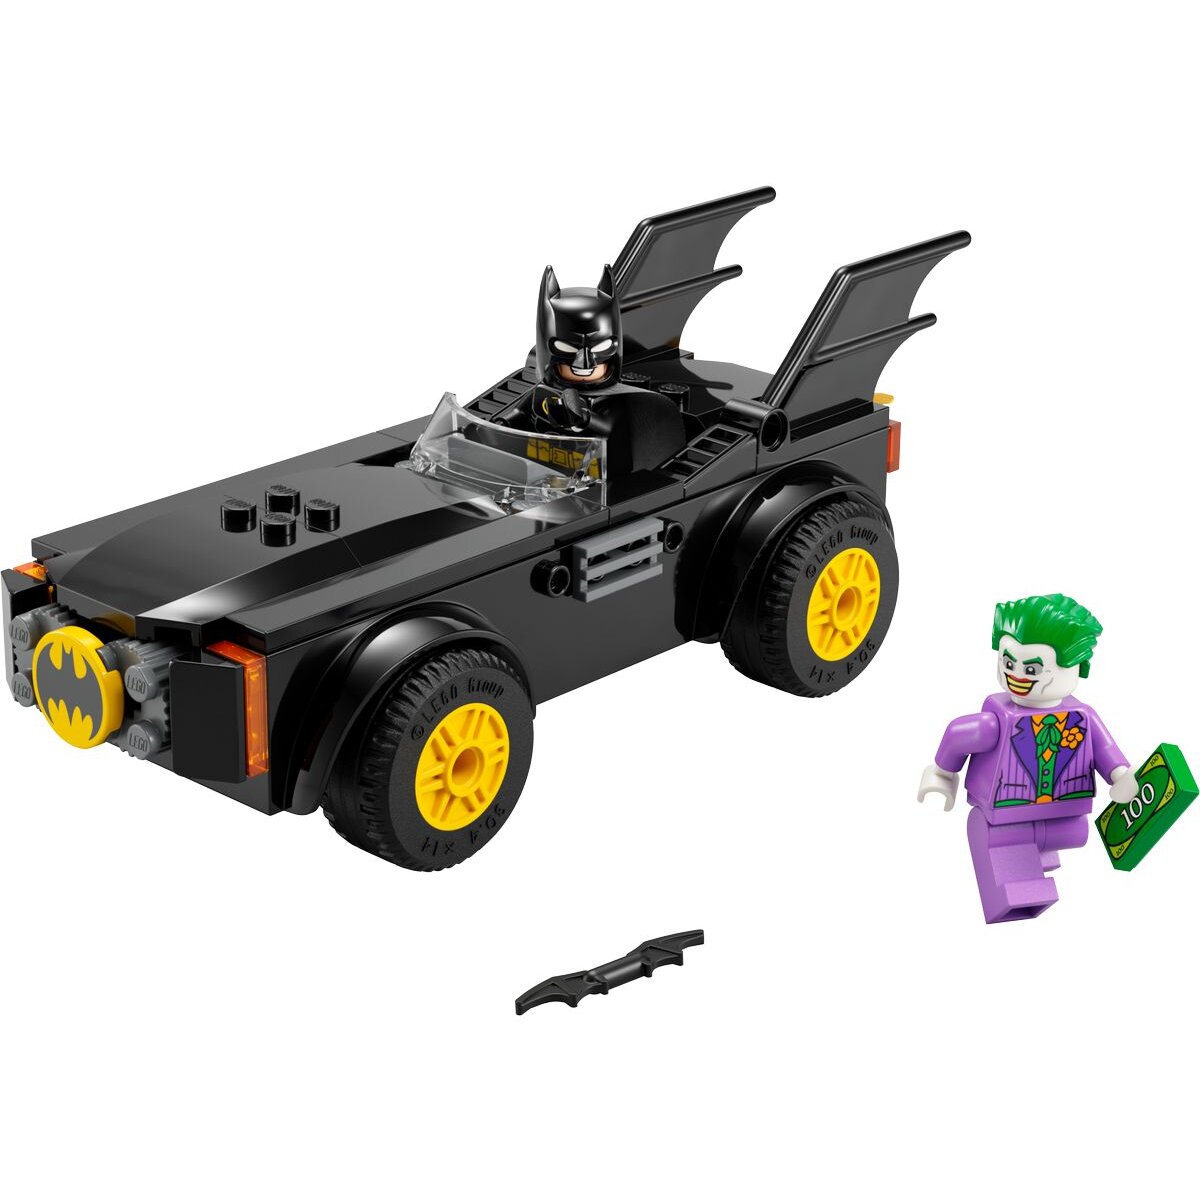 LEGO® Super Heroes DC 76264 Verfolgungsjagd im Batmobile: Batman vs. Joker